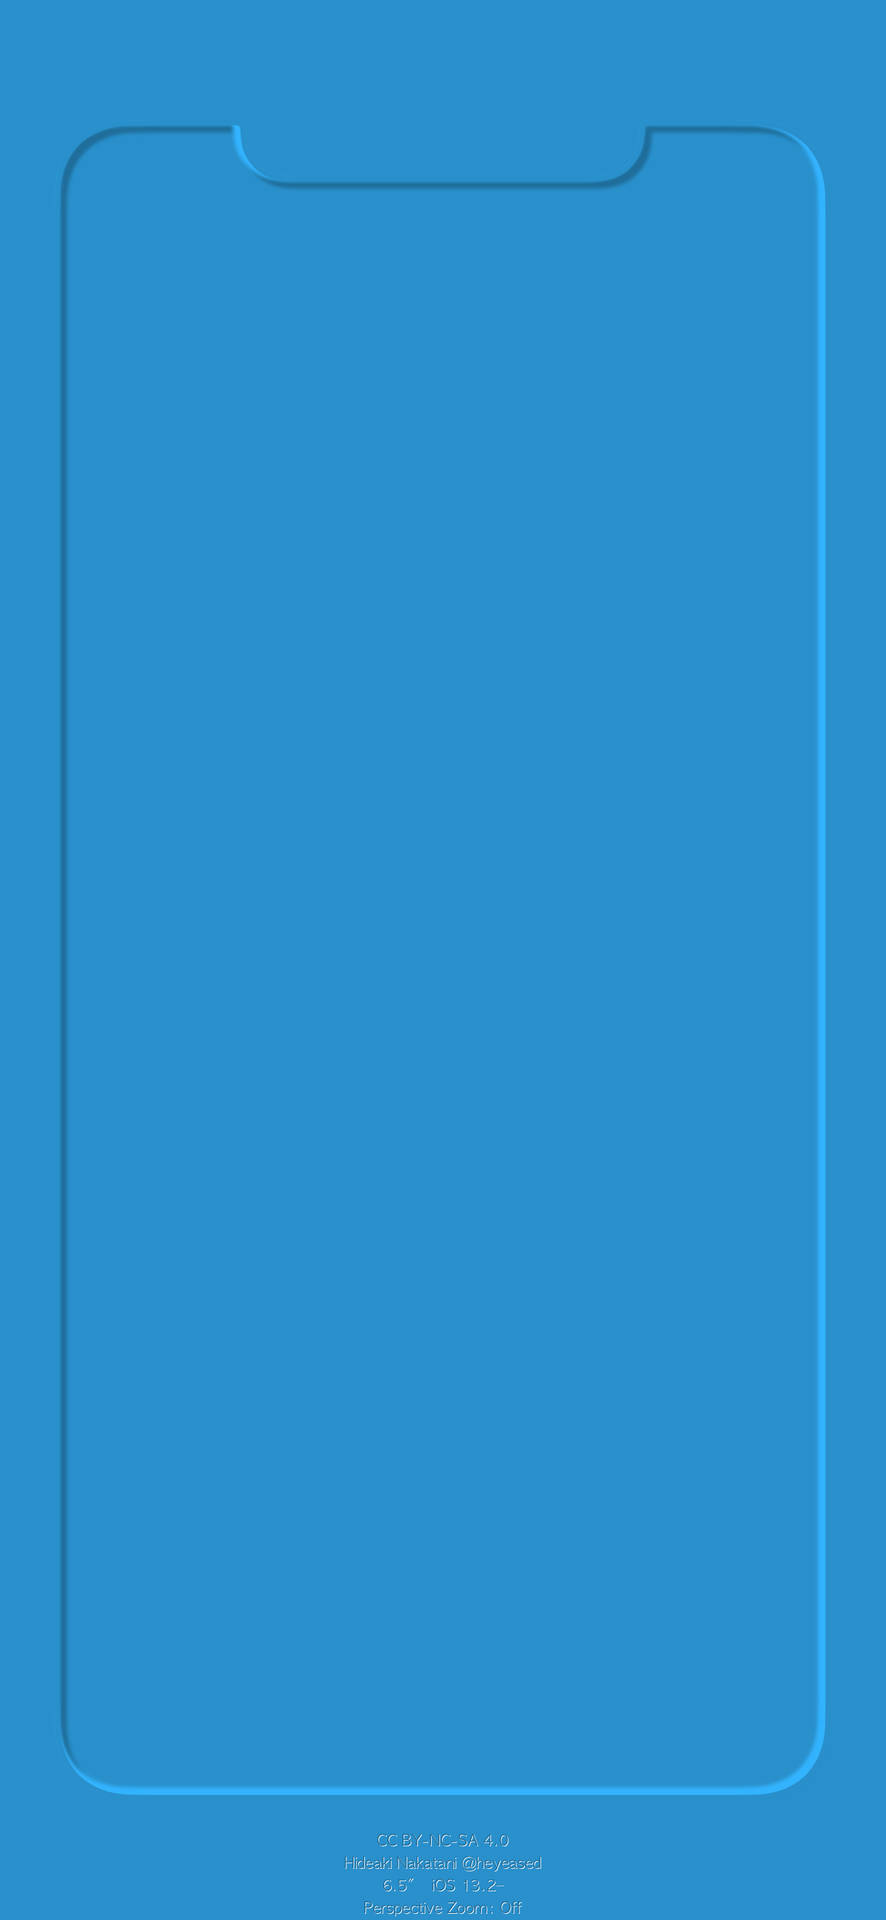 Outline 3d Blue Display Iphone Wallpaper